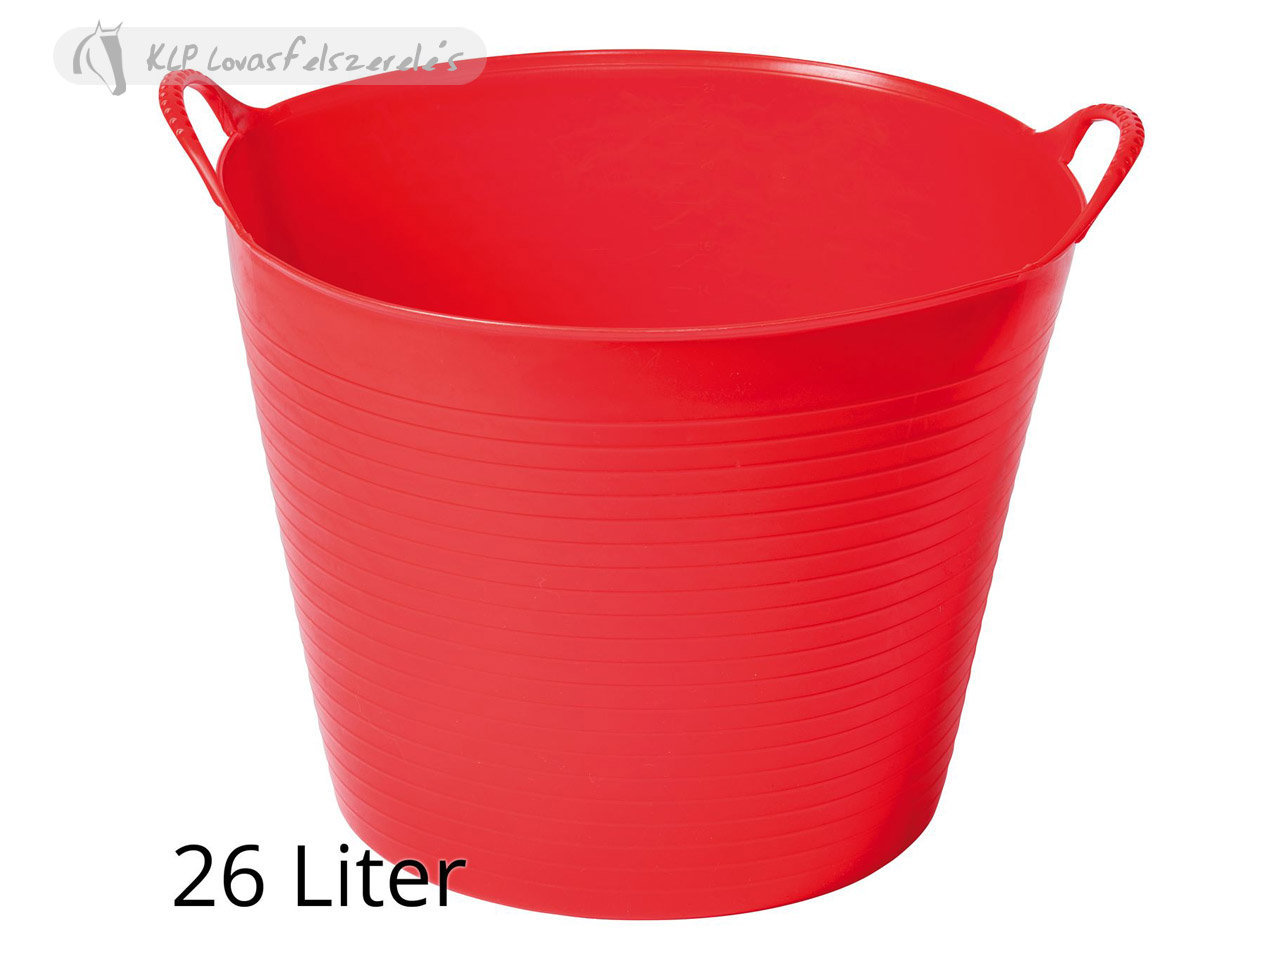 Flexible Feeding Bucket (26 Liter)